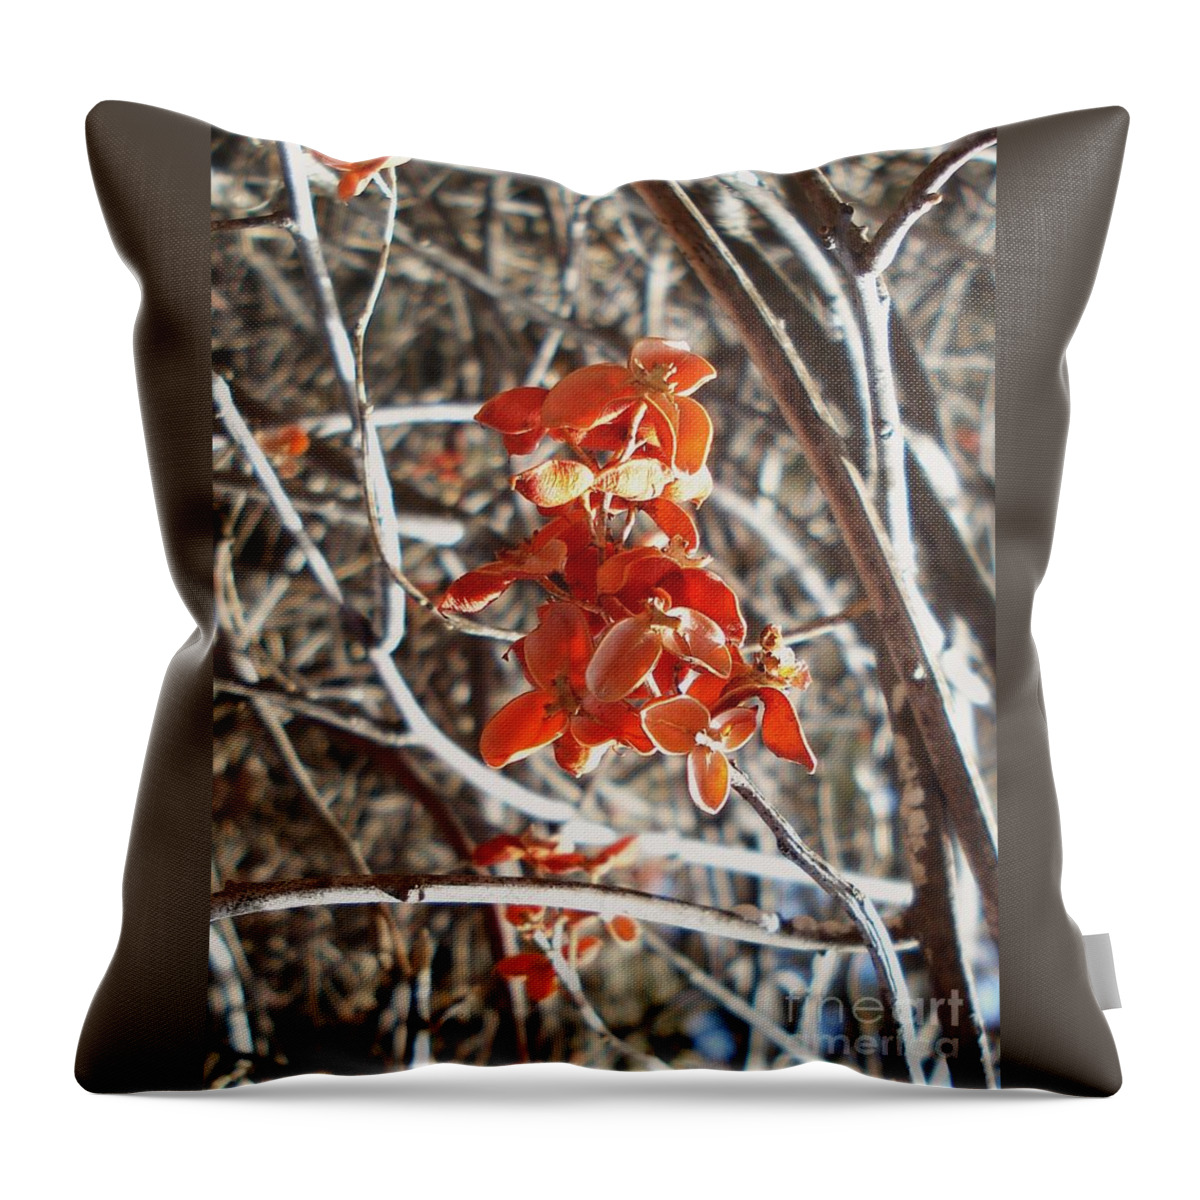 Winter Throw Pillow featuring the photograph Woodland beauty 2 by J L Zarek